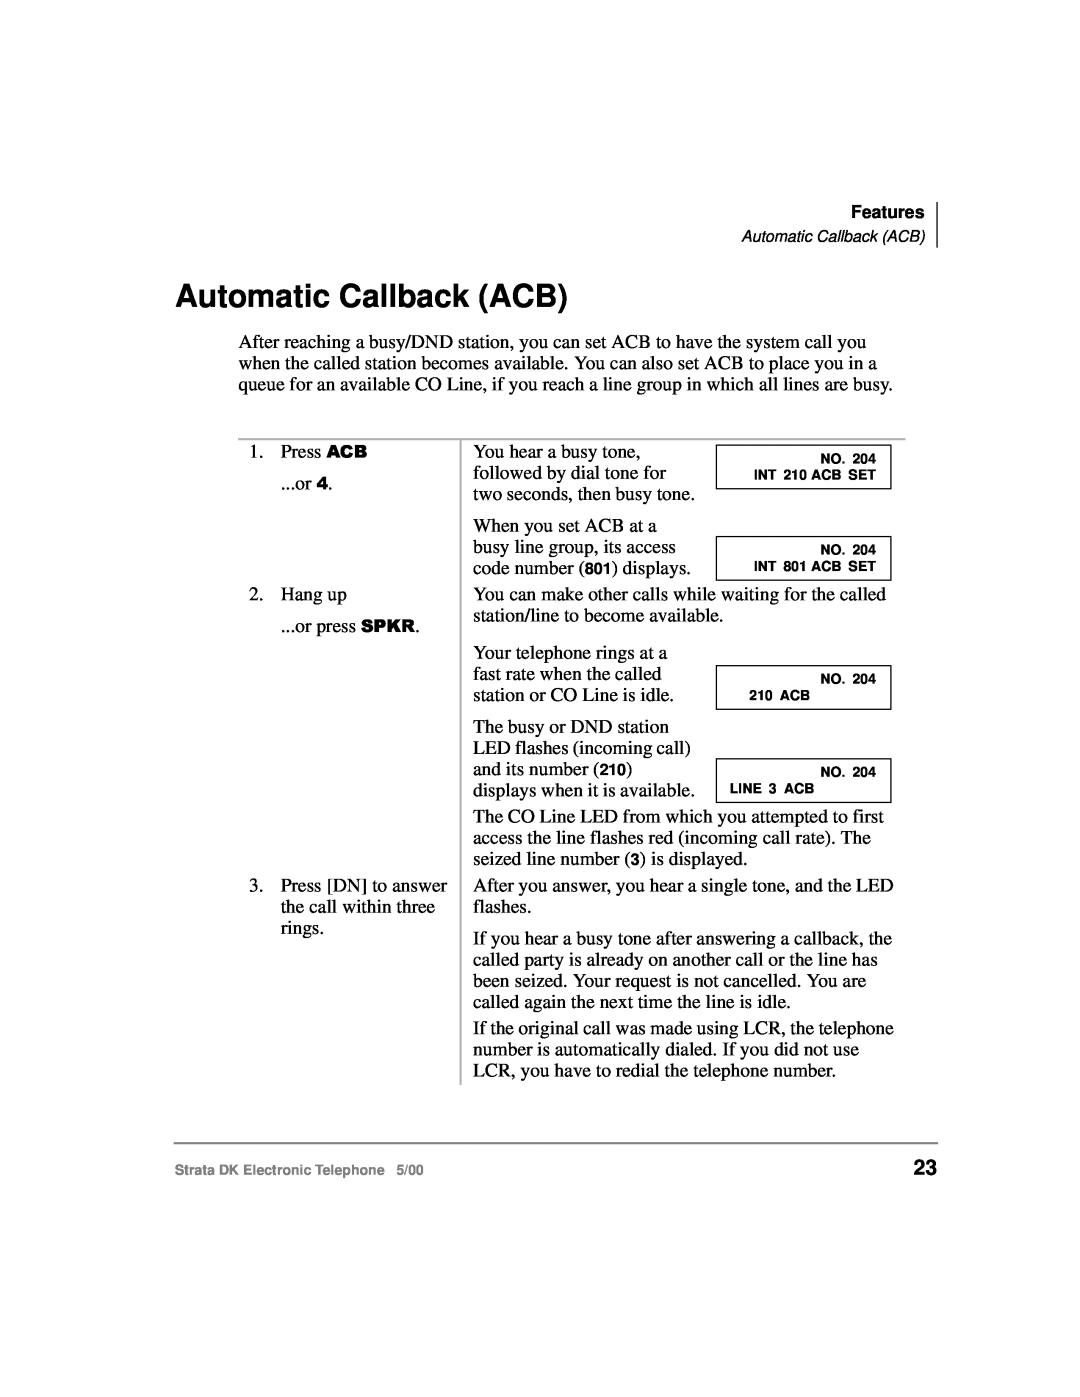 Toshiba Strata DK manual Automatic Callback ACB 